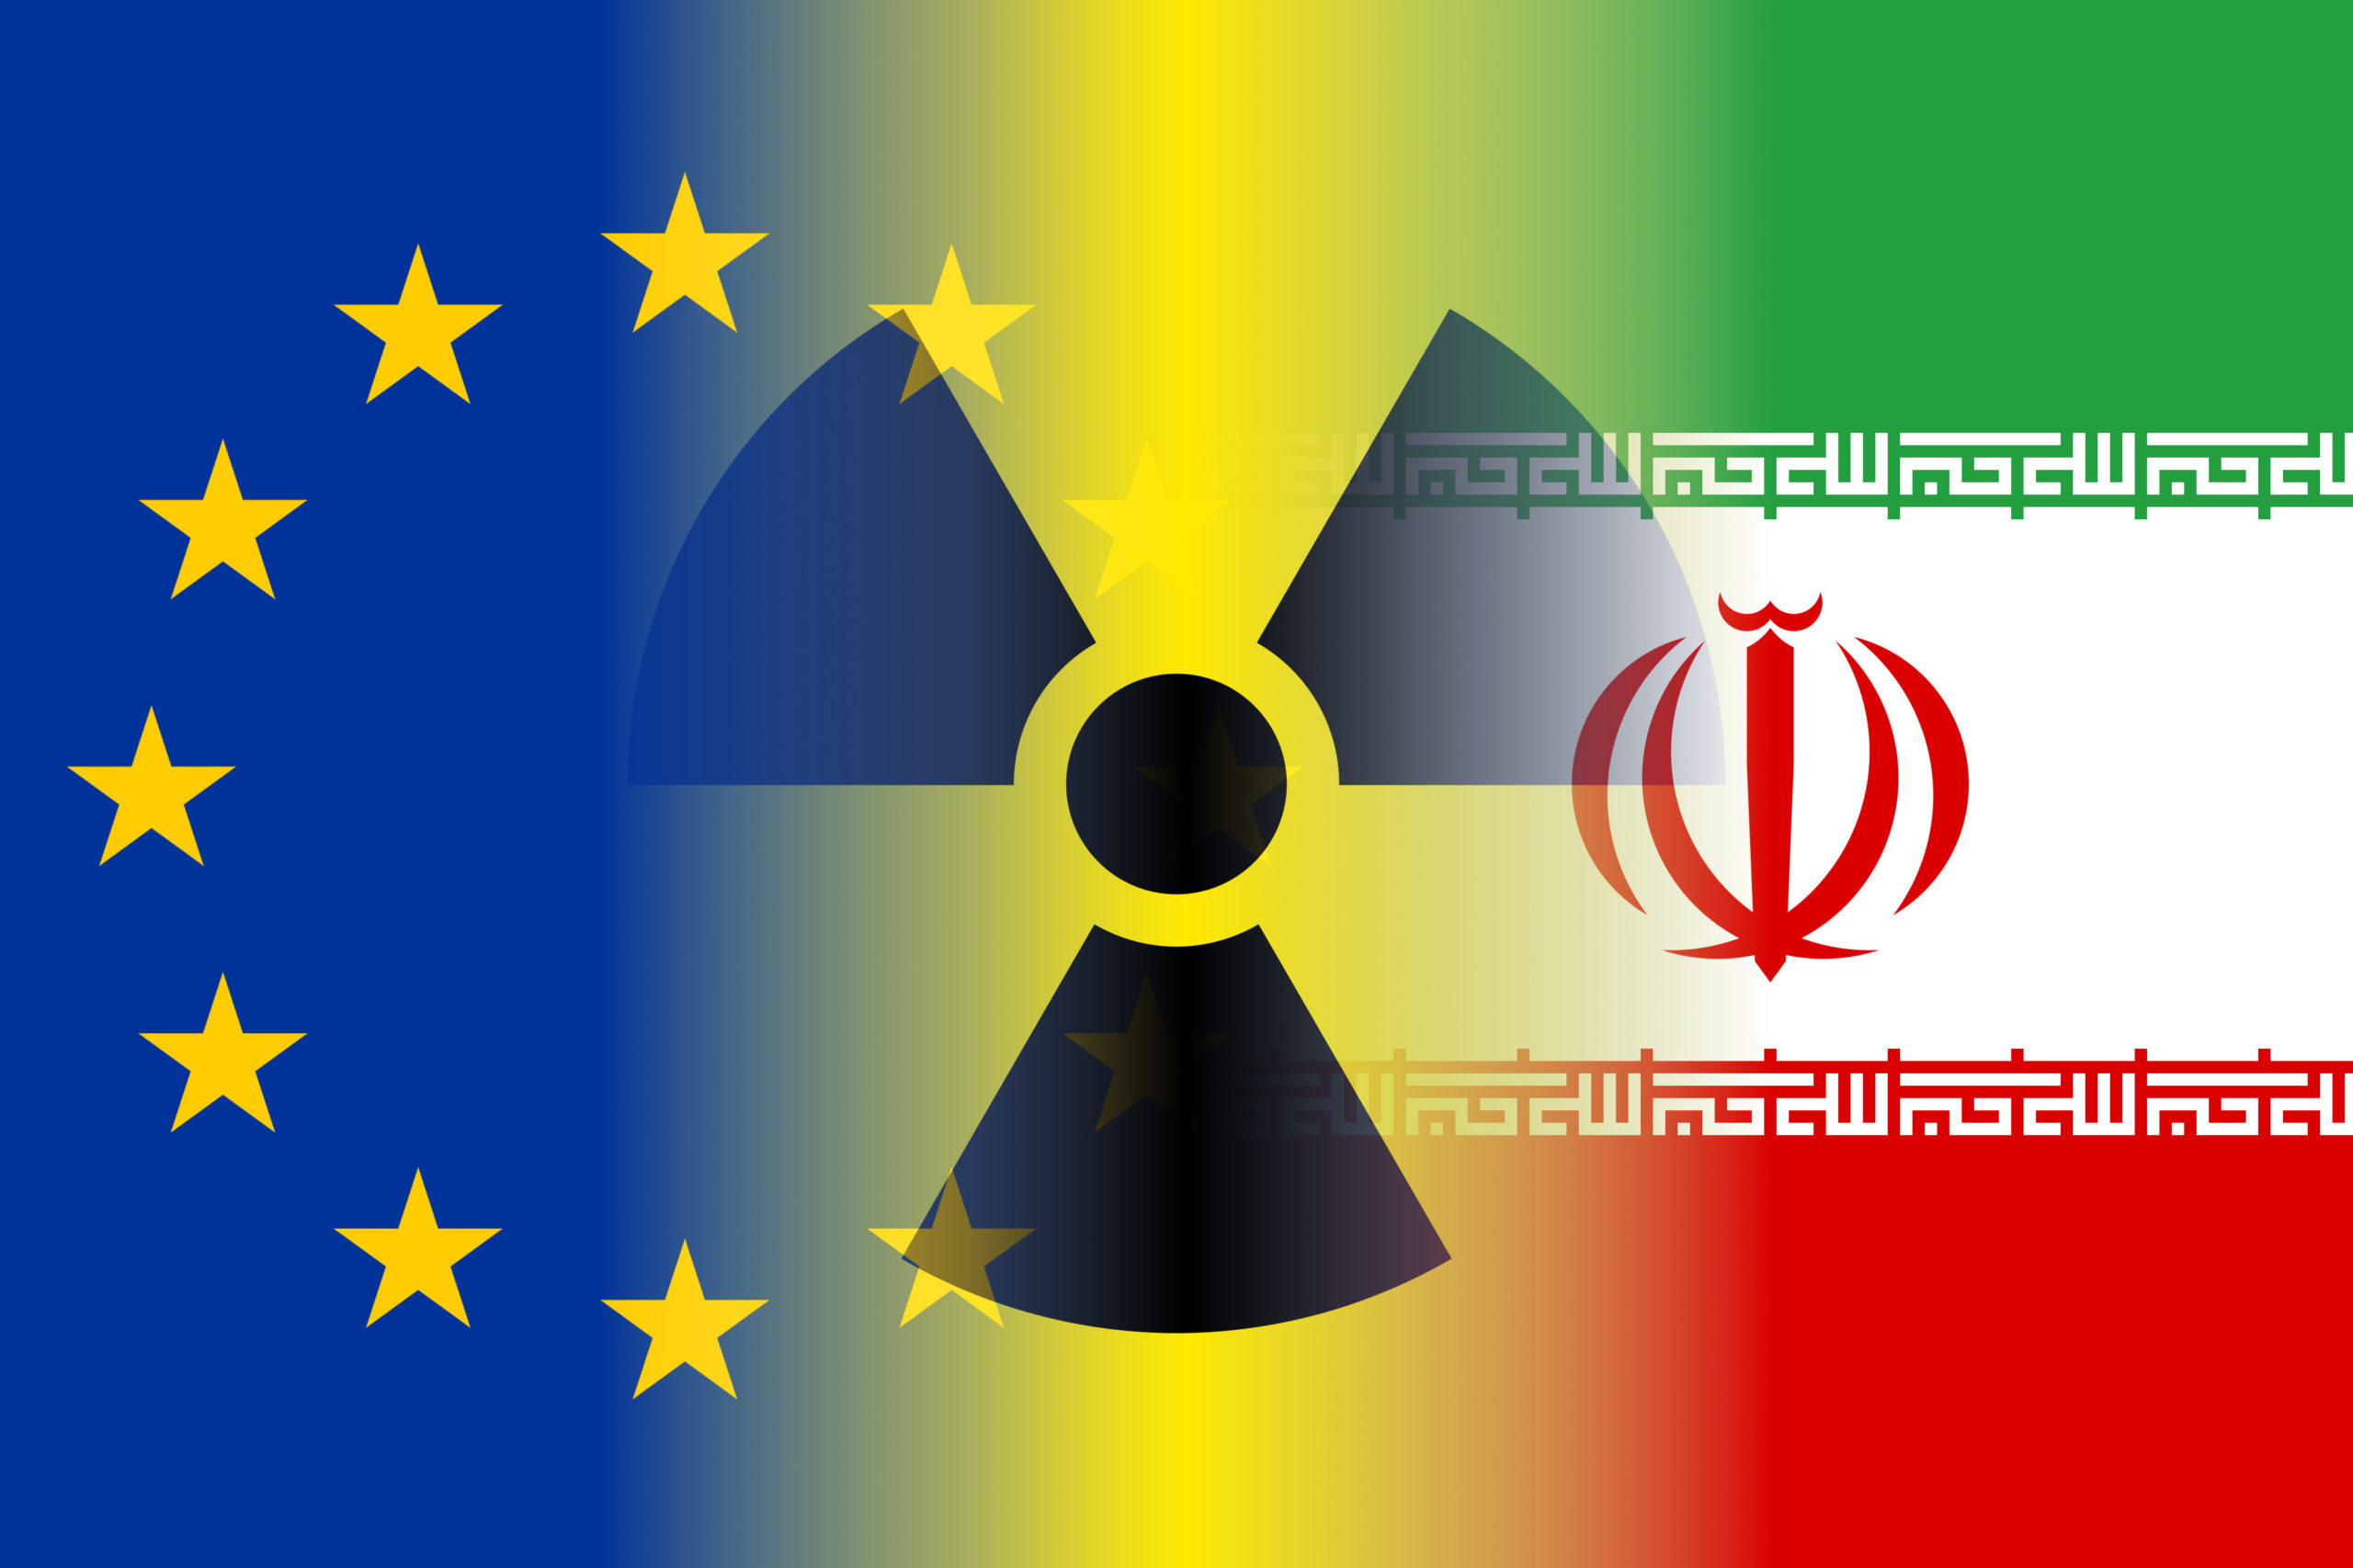 Borrell: Iran nuclear talks “paused”